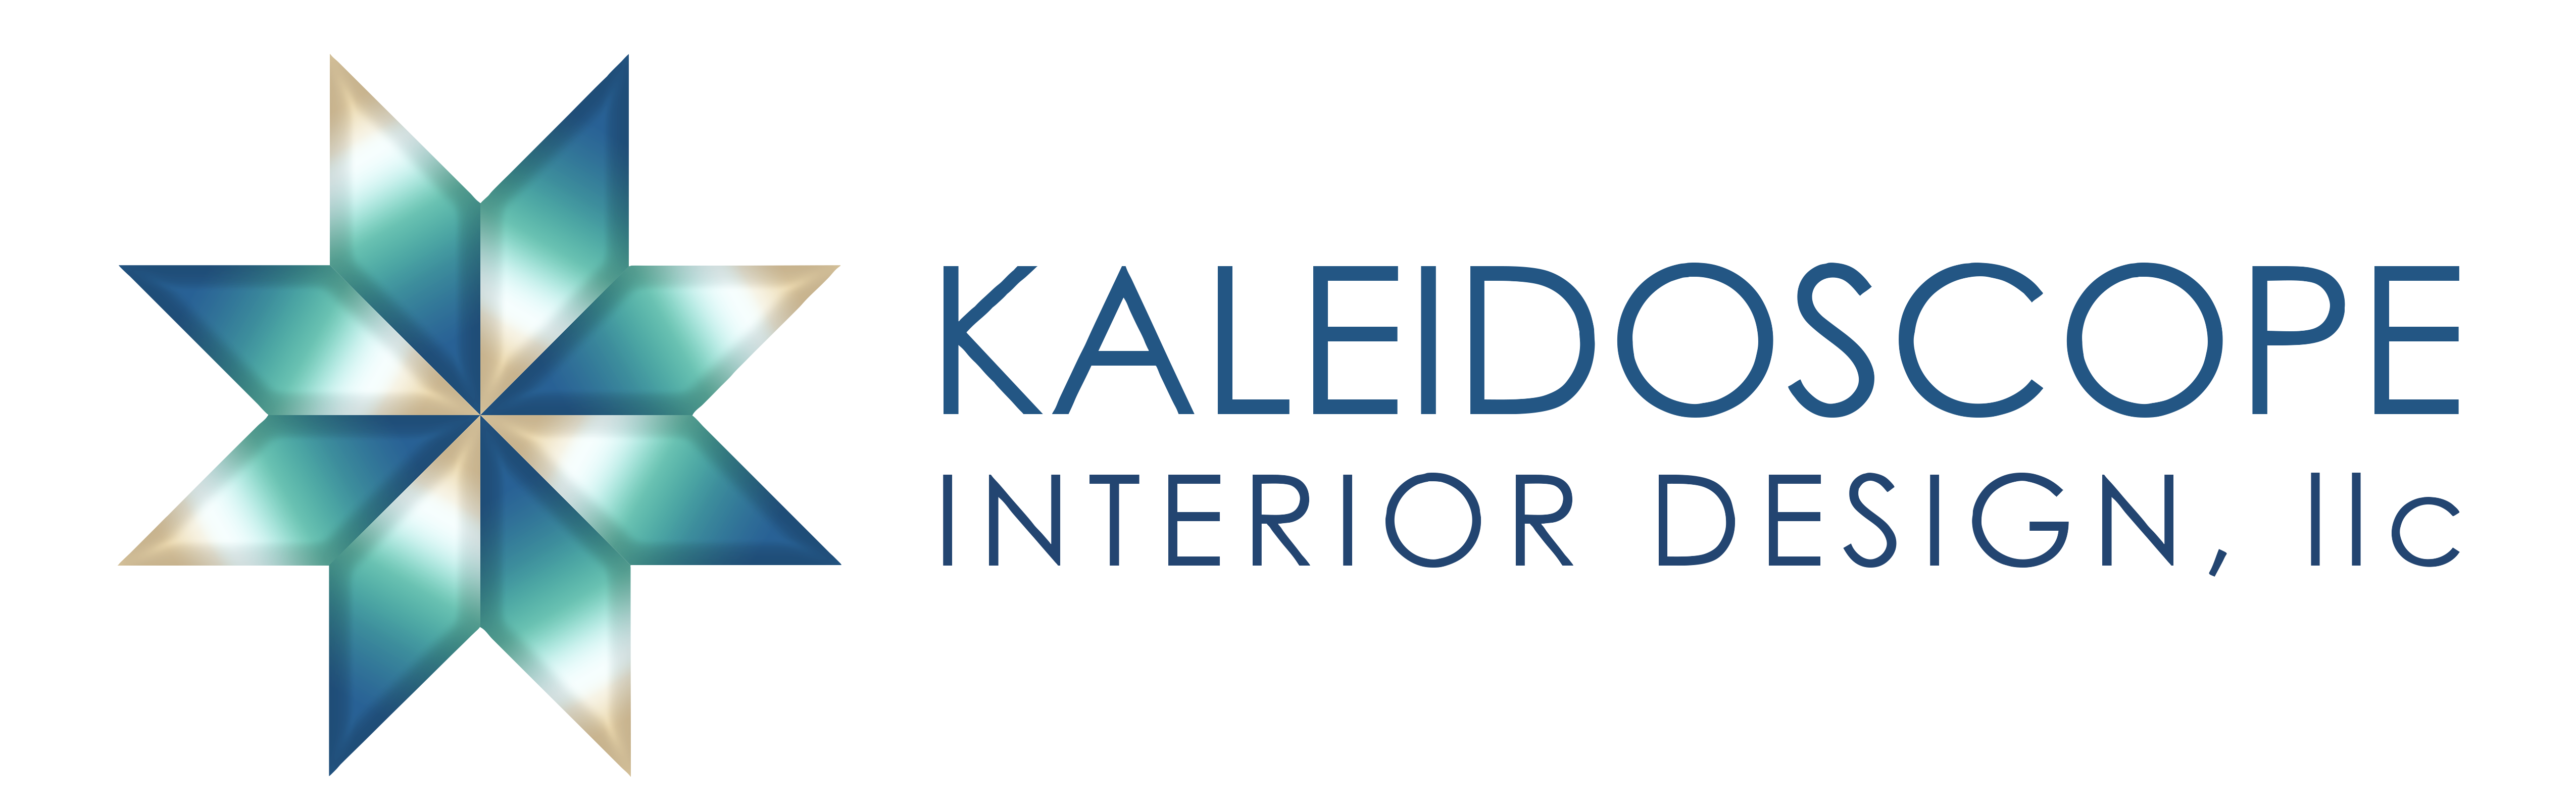 Kaleidoscope Interior Design